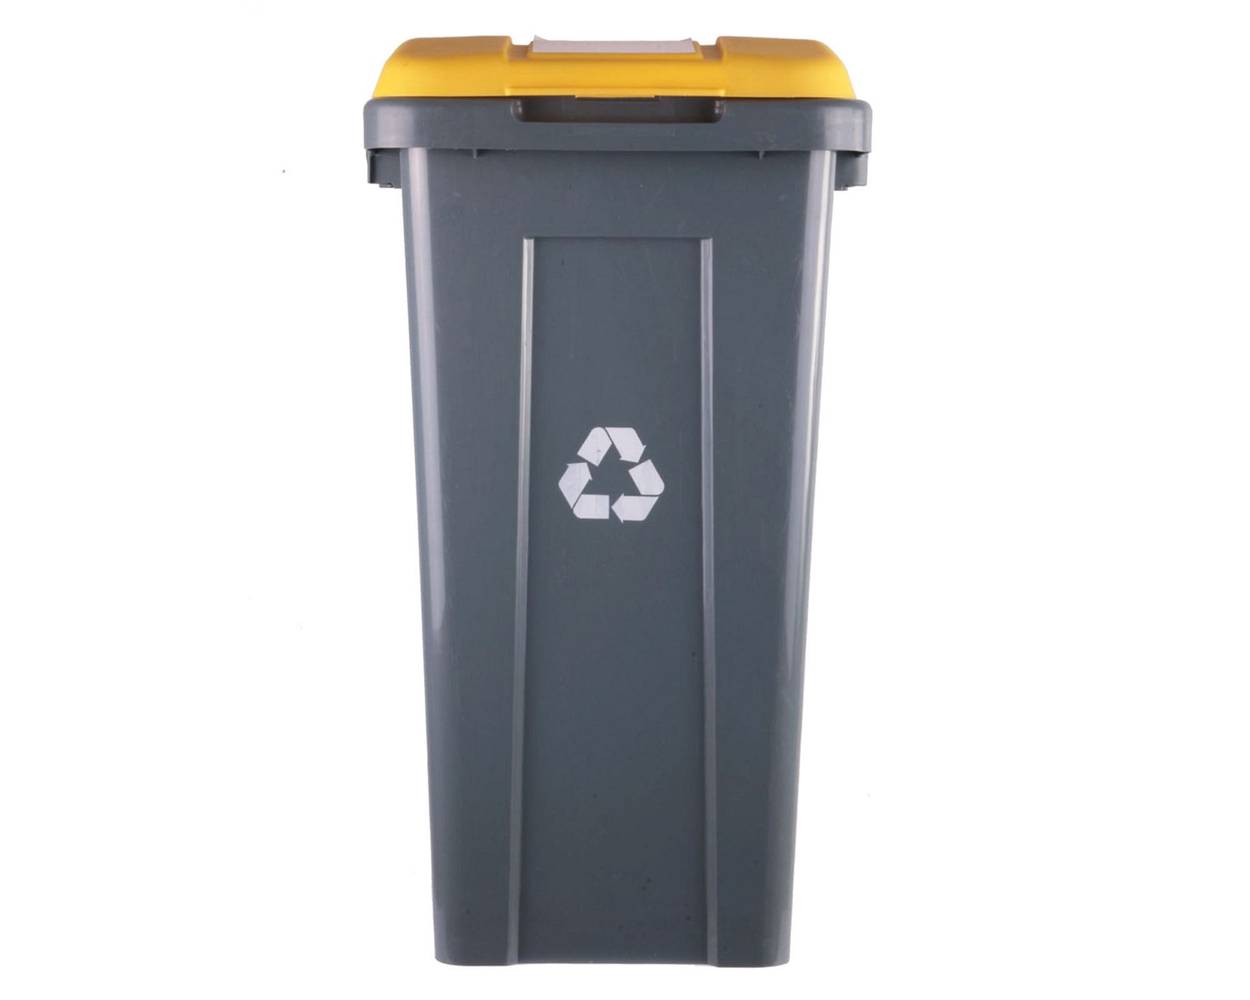 Wenco basurero reciclaje tapa amarillo (61 x 34 x 40 cm)